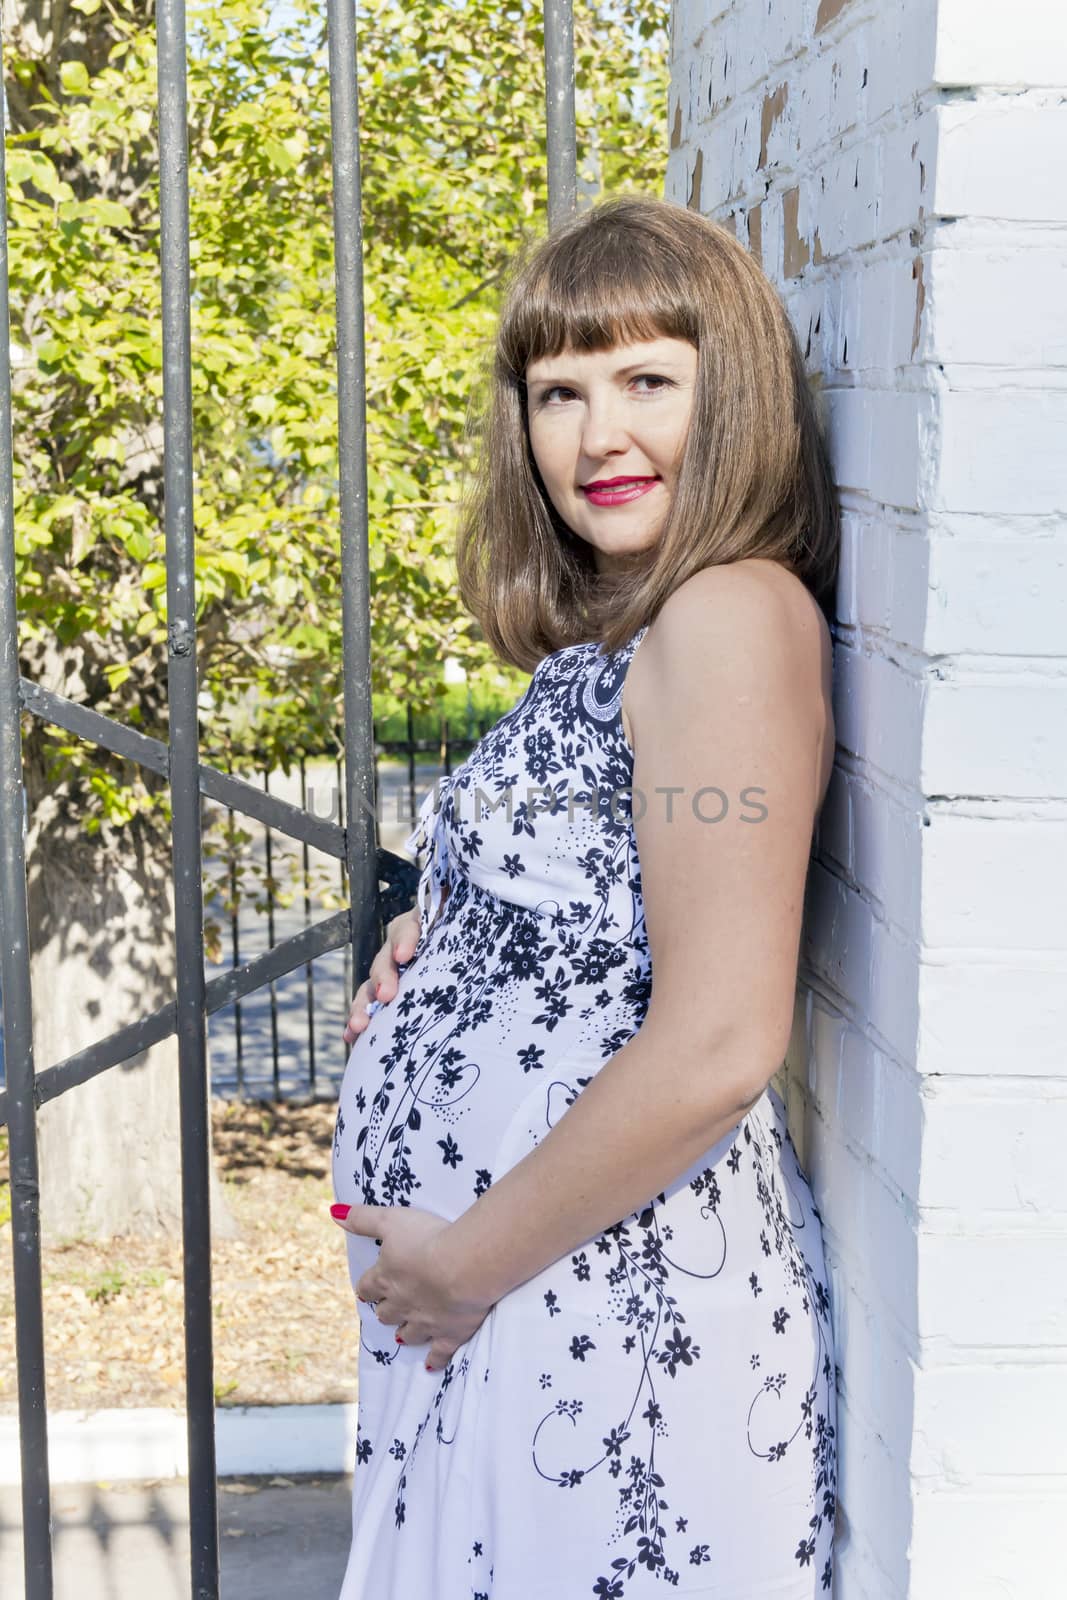 Pregnant woman in sunlight near white brick wall